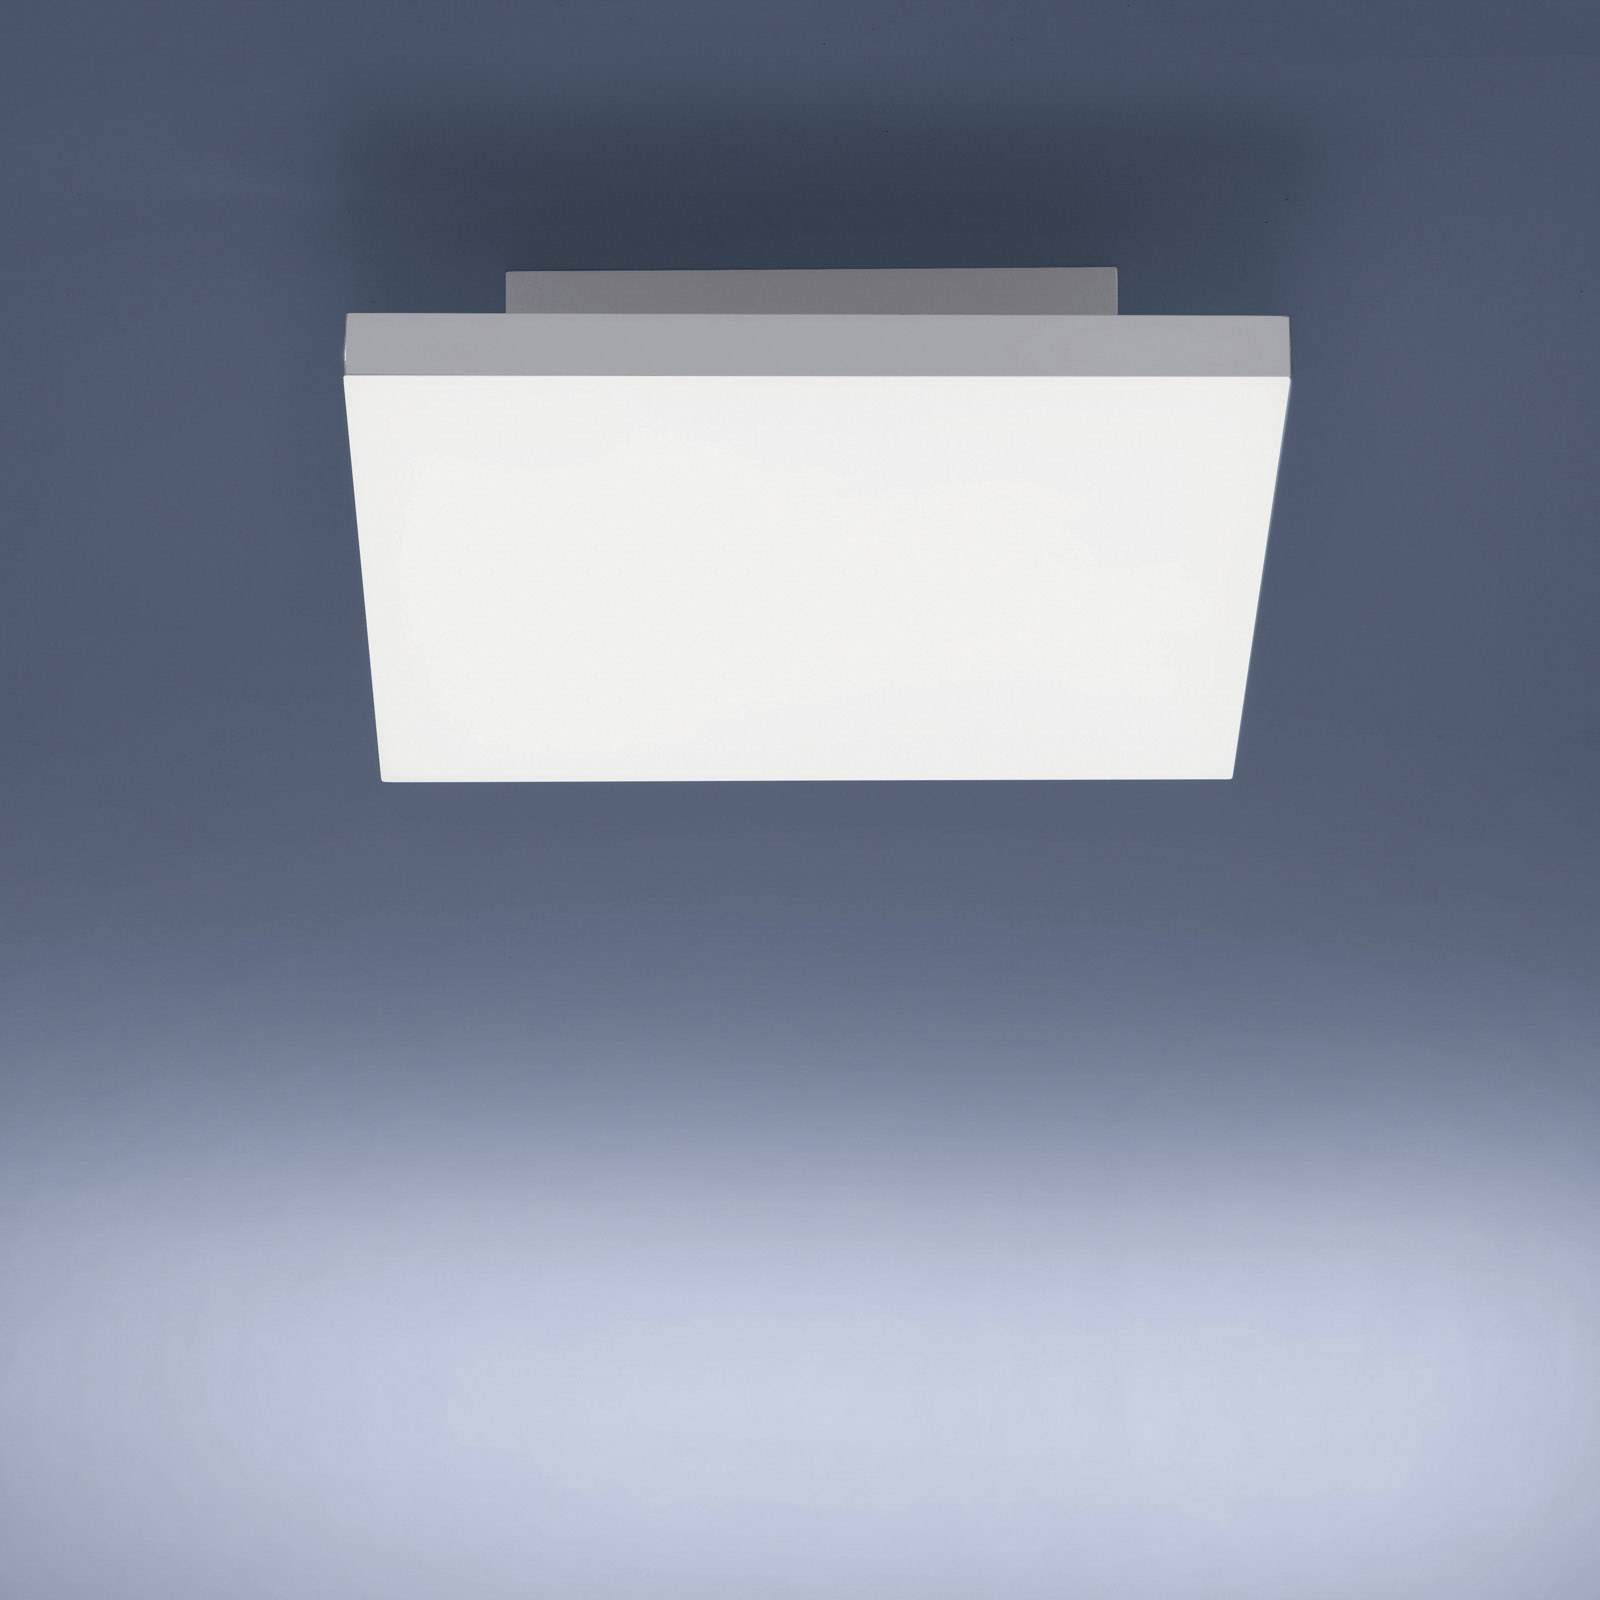 Lampa sufitowa LED Canvas tunable white, Ø 30 cm